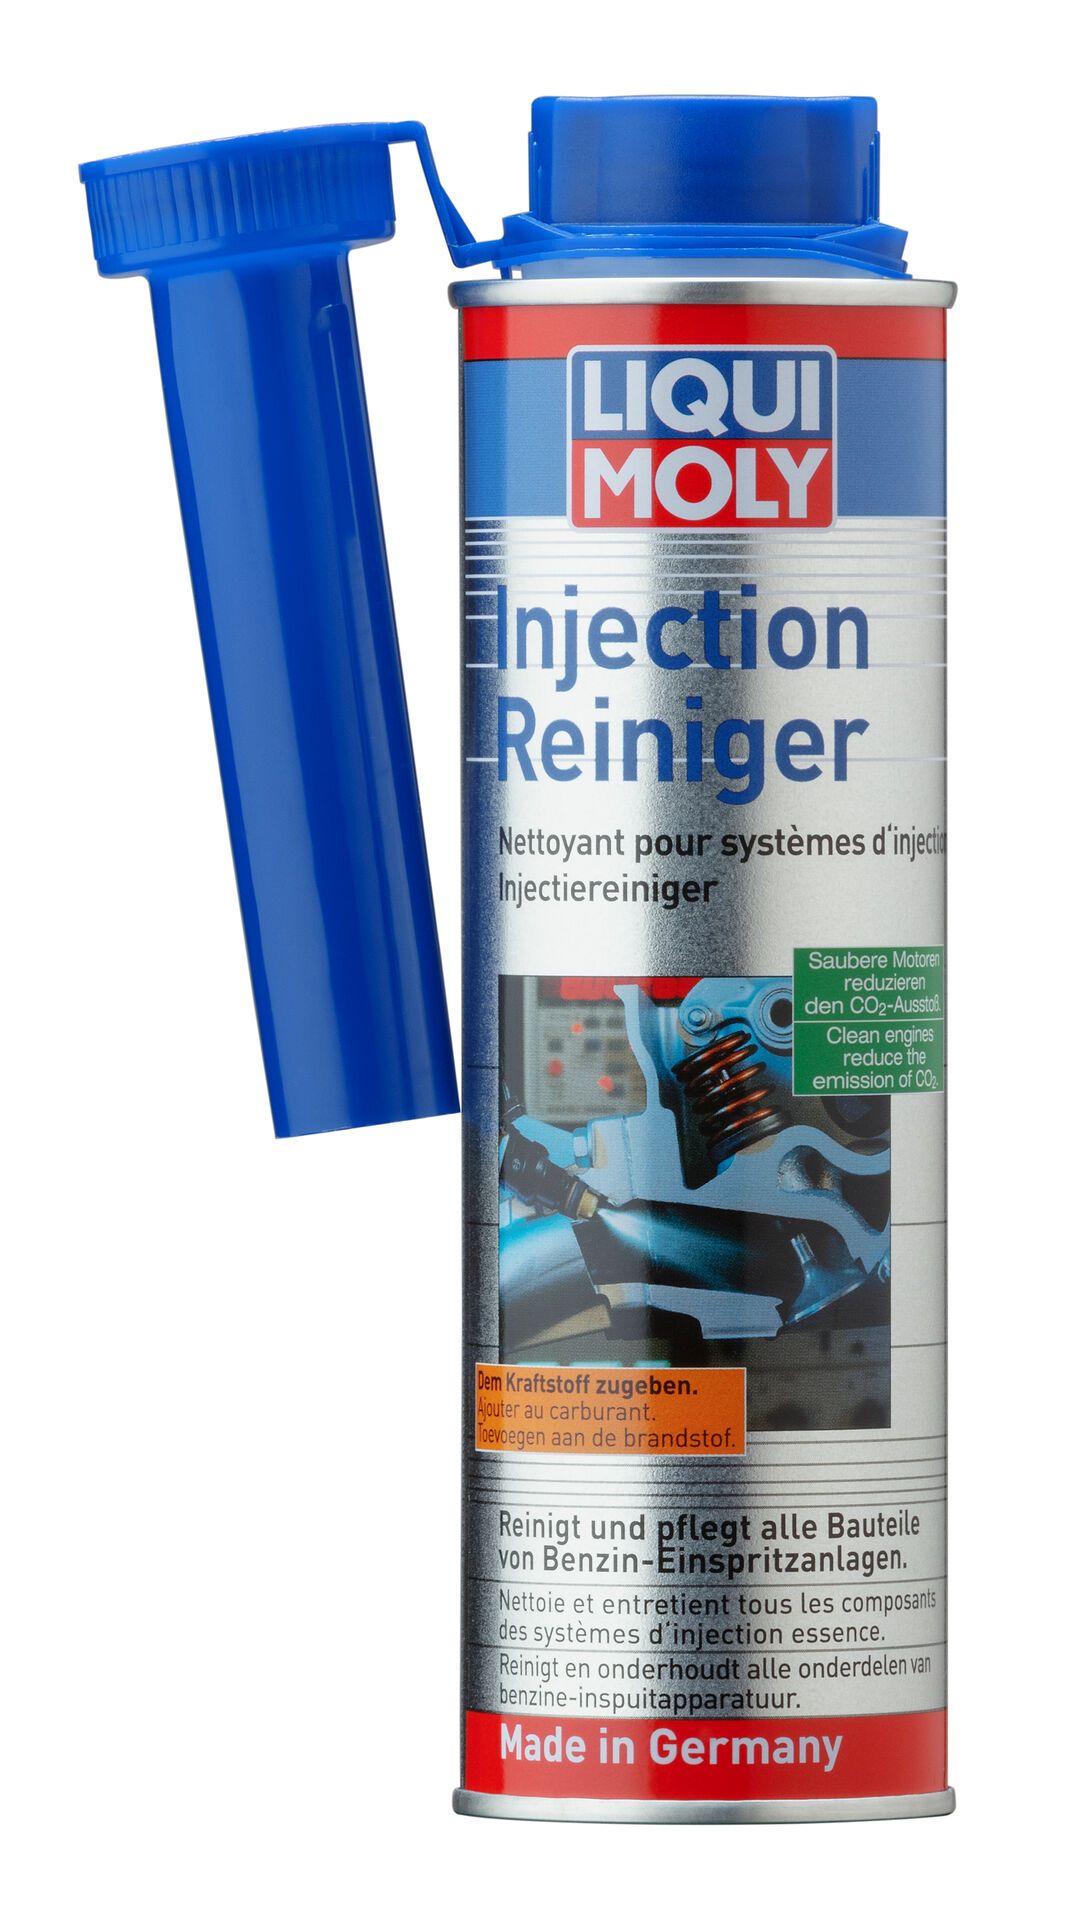 Liqui Moly 5110 1x300 ml Dose Injection Reiniger